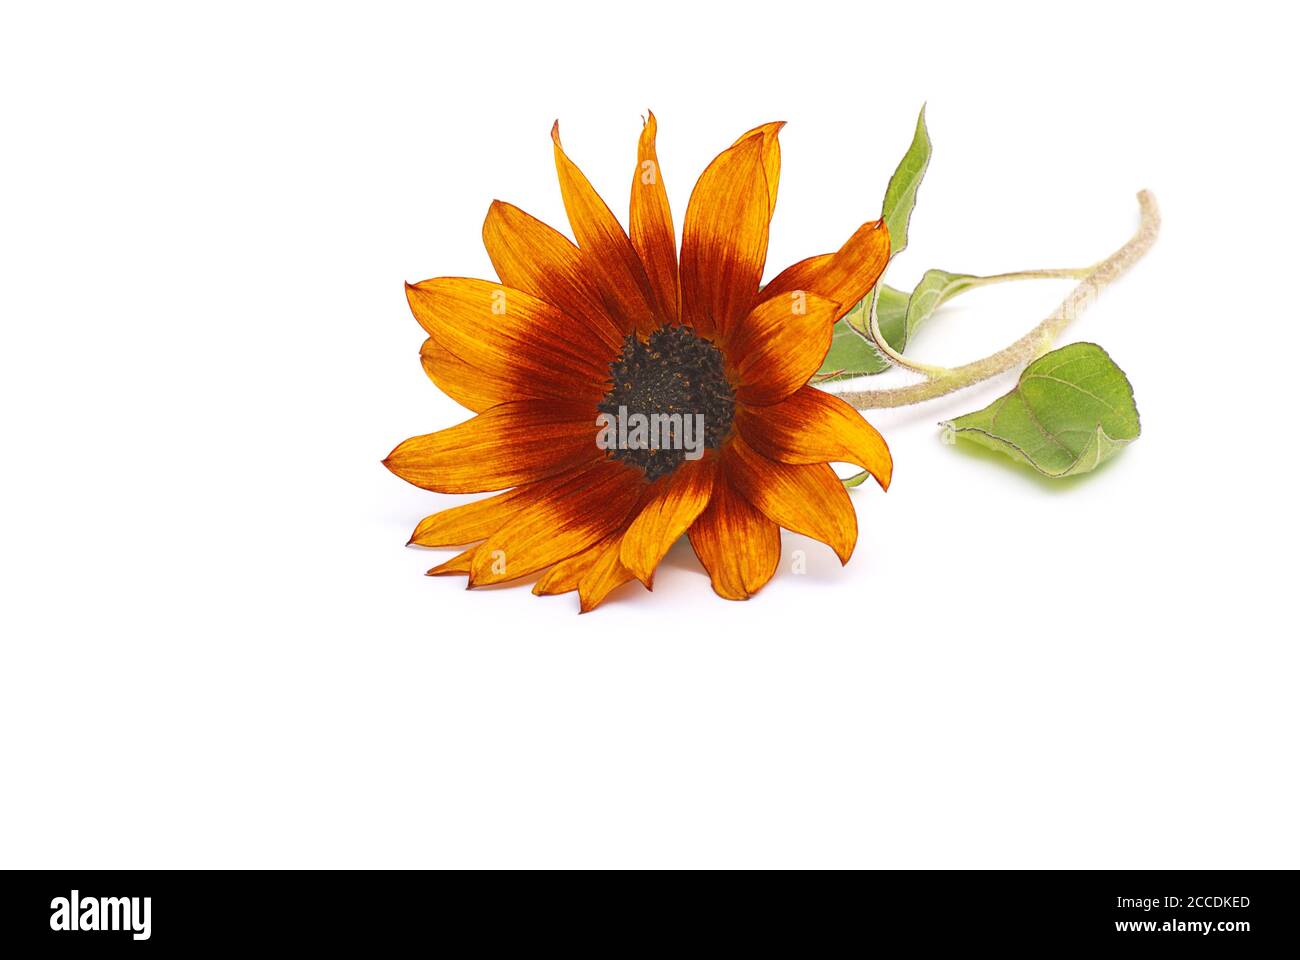 sunflower on white background Stock Photo